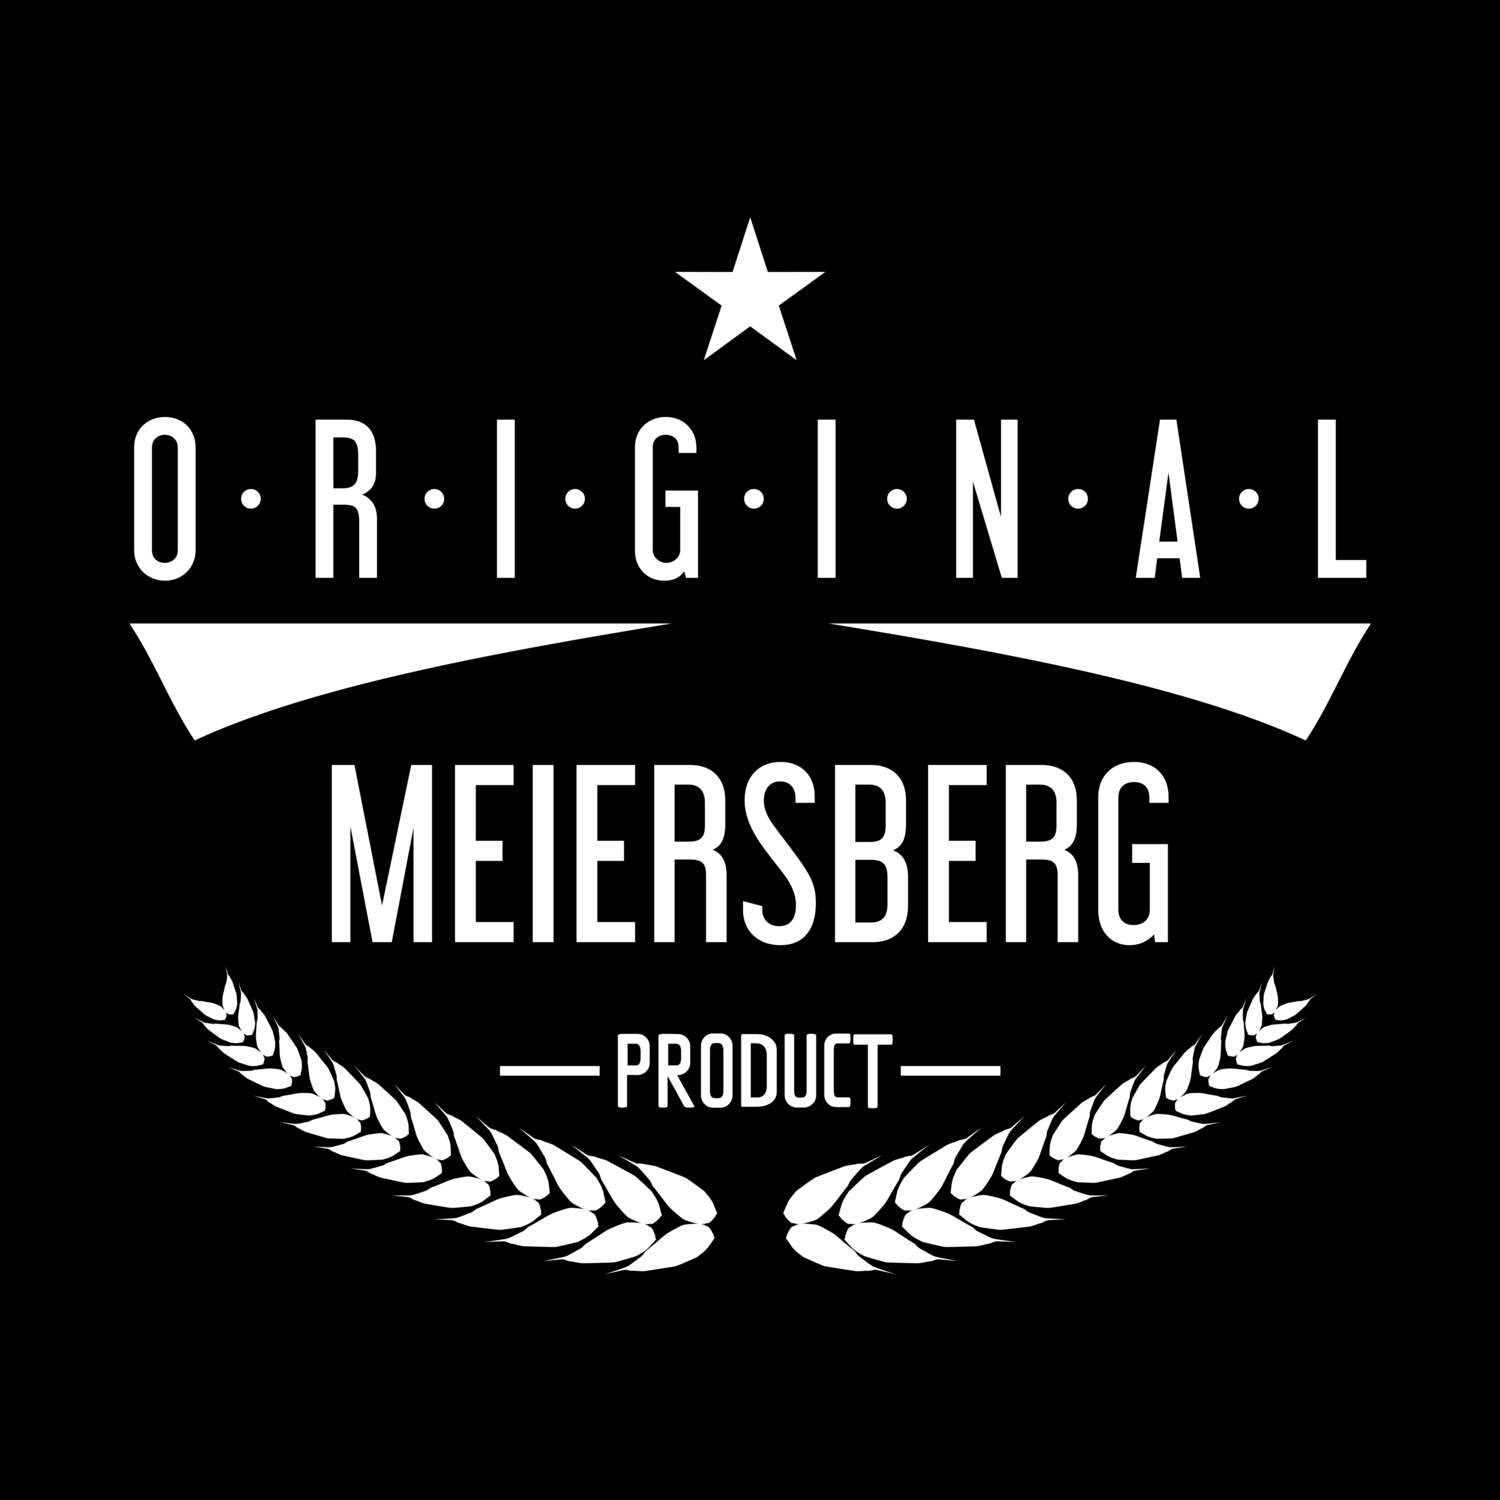 Meiersberg T-Shirt »Original Product«